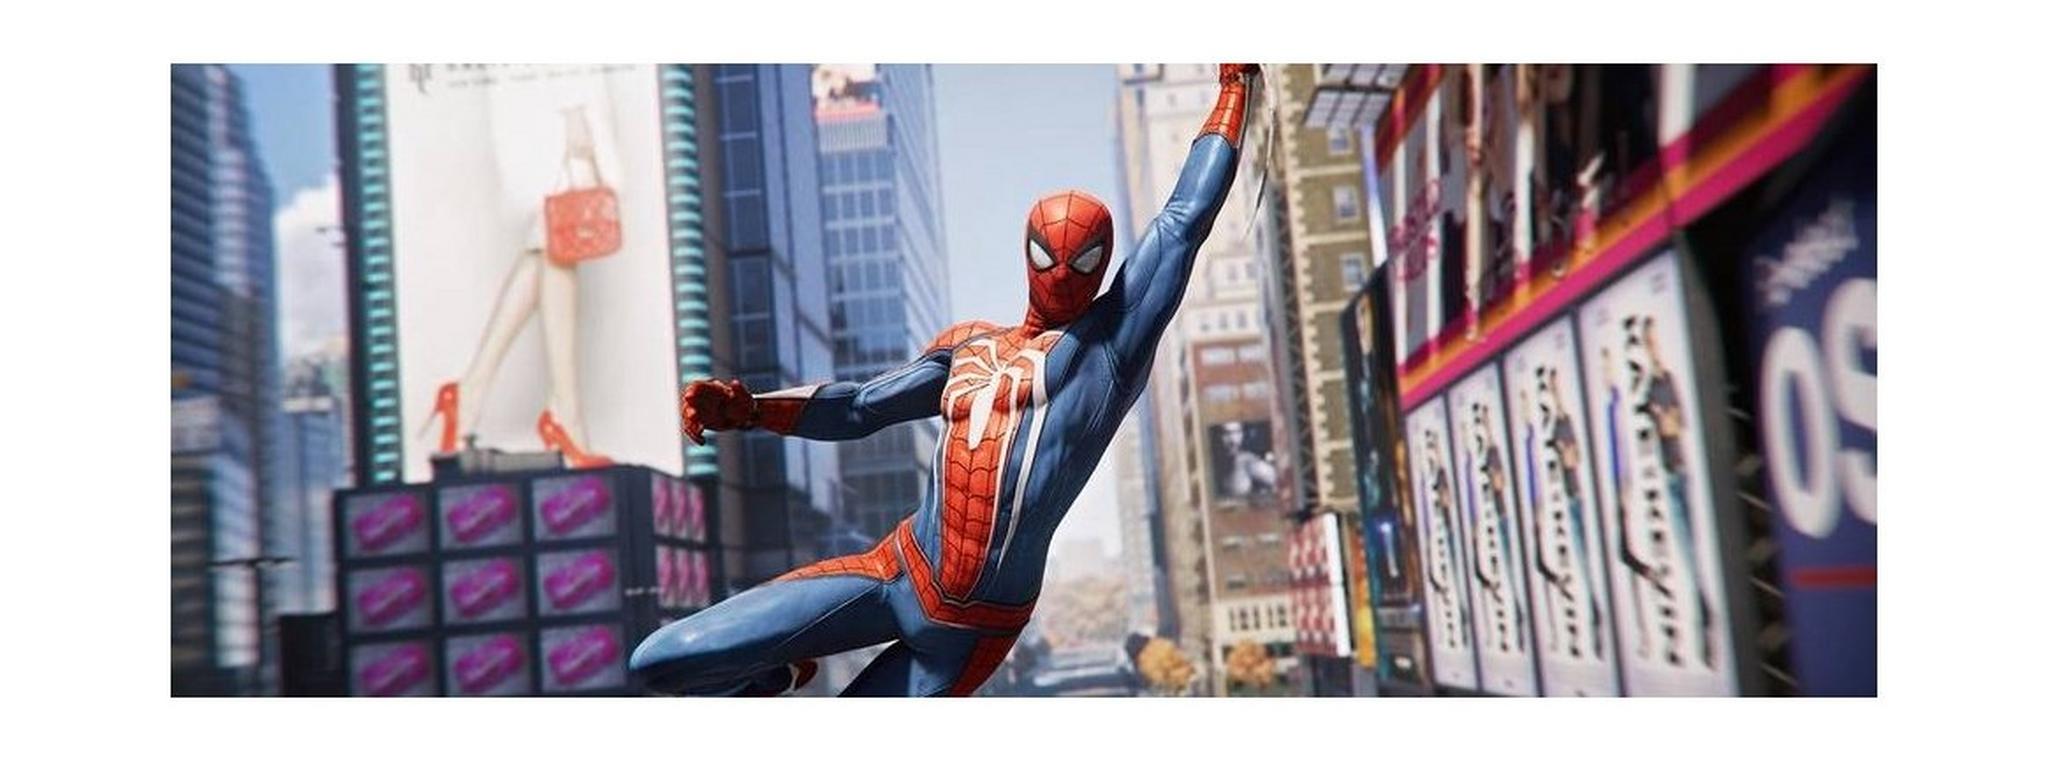 Pre-Order Marvel's Spider-Man - PS4 Game